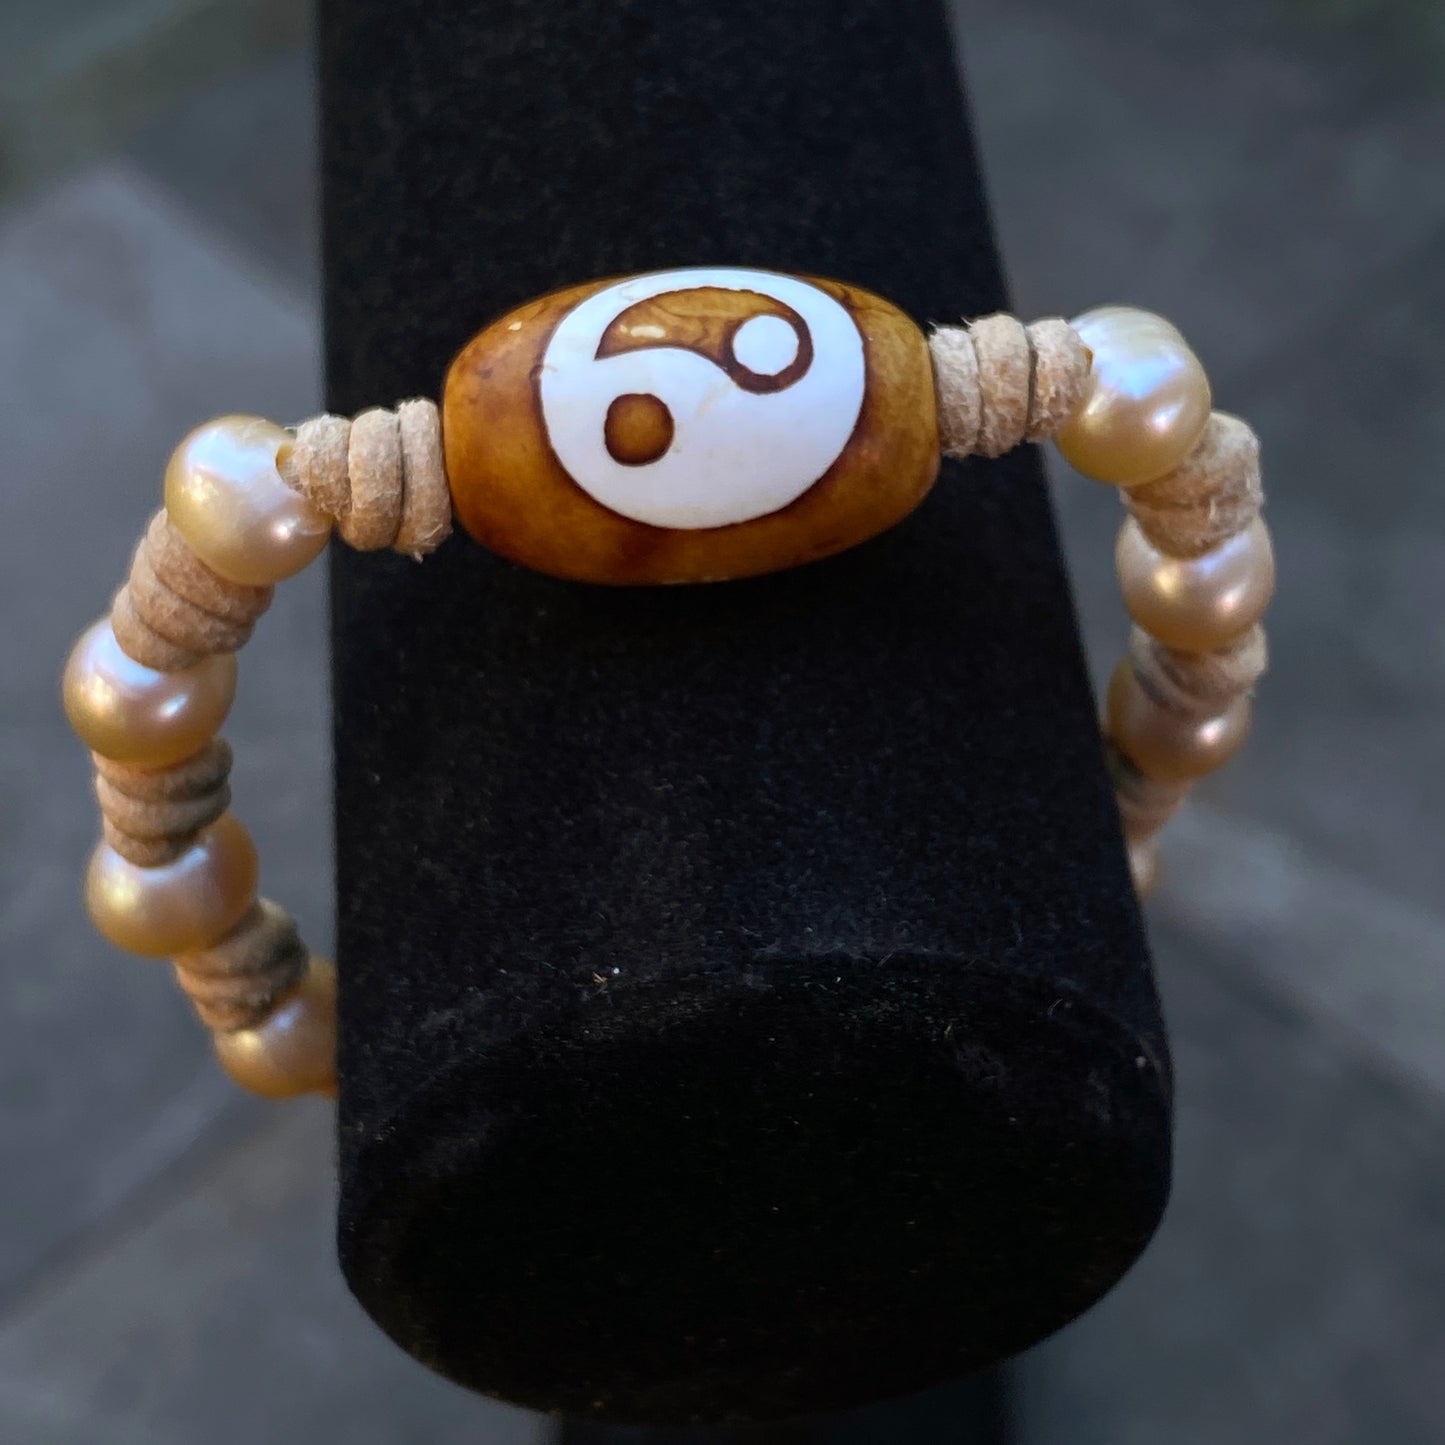 Women’s Genuine Freshwater Pearl and Tibetan Agate Gemstone Yin Yang leather bracelet